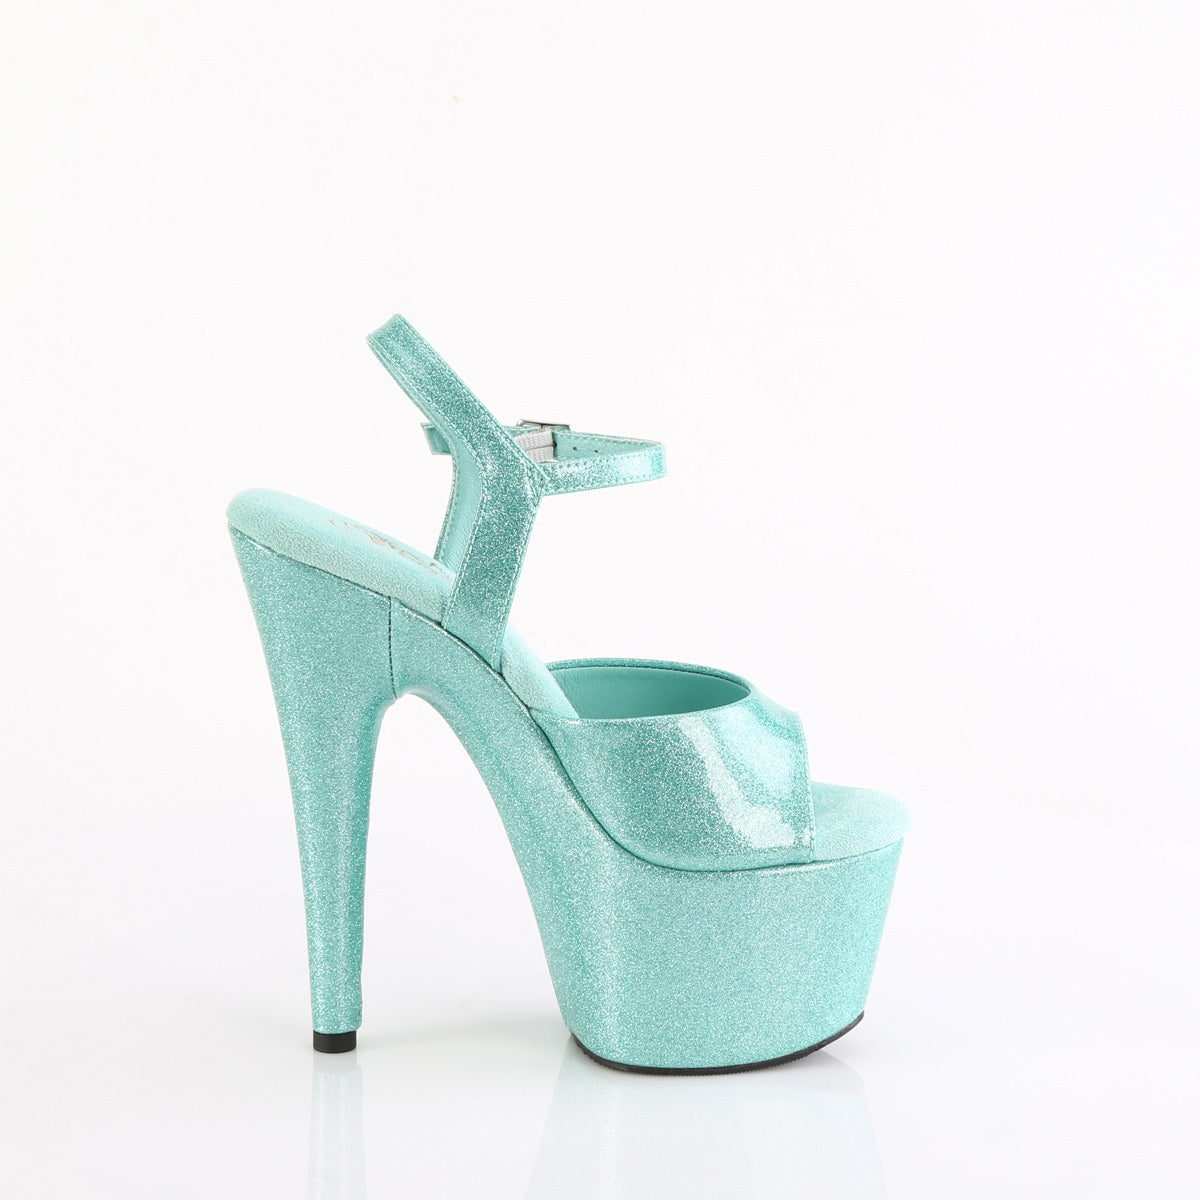 My Delicious Rainer Teal Multi Color Block Platform Heels - $29.00 - Lulus